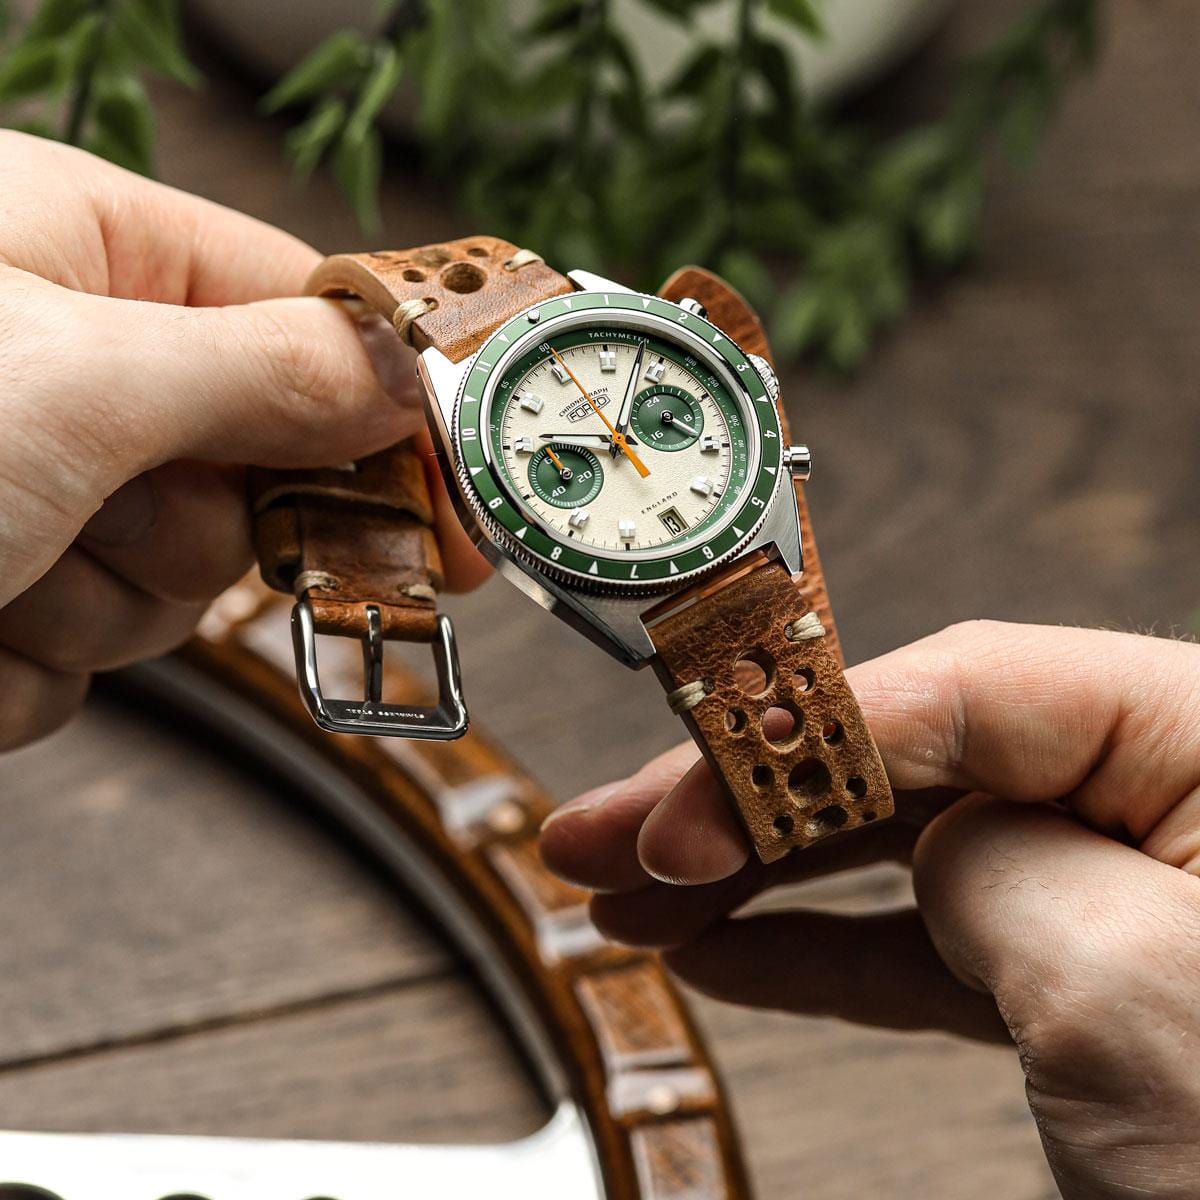 WatchGecko V-Stitch Italian Leather Perforated Watch Strap - Light Brown